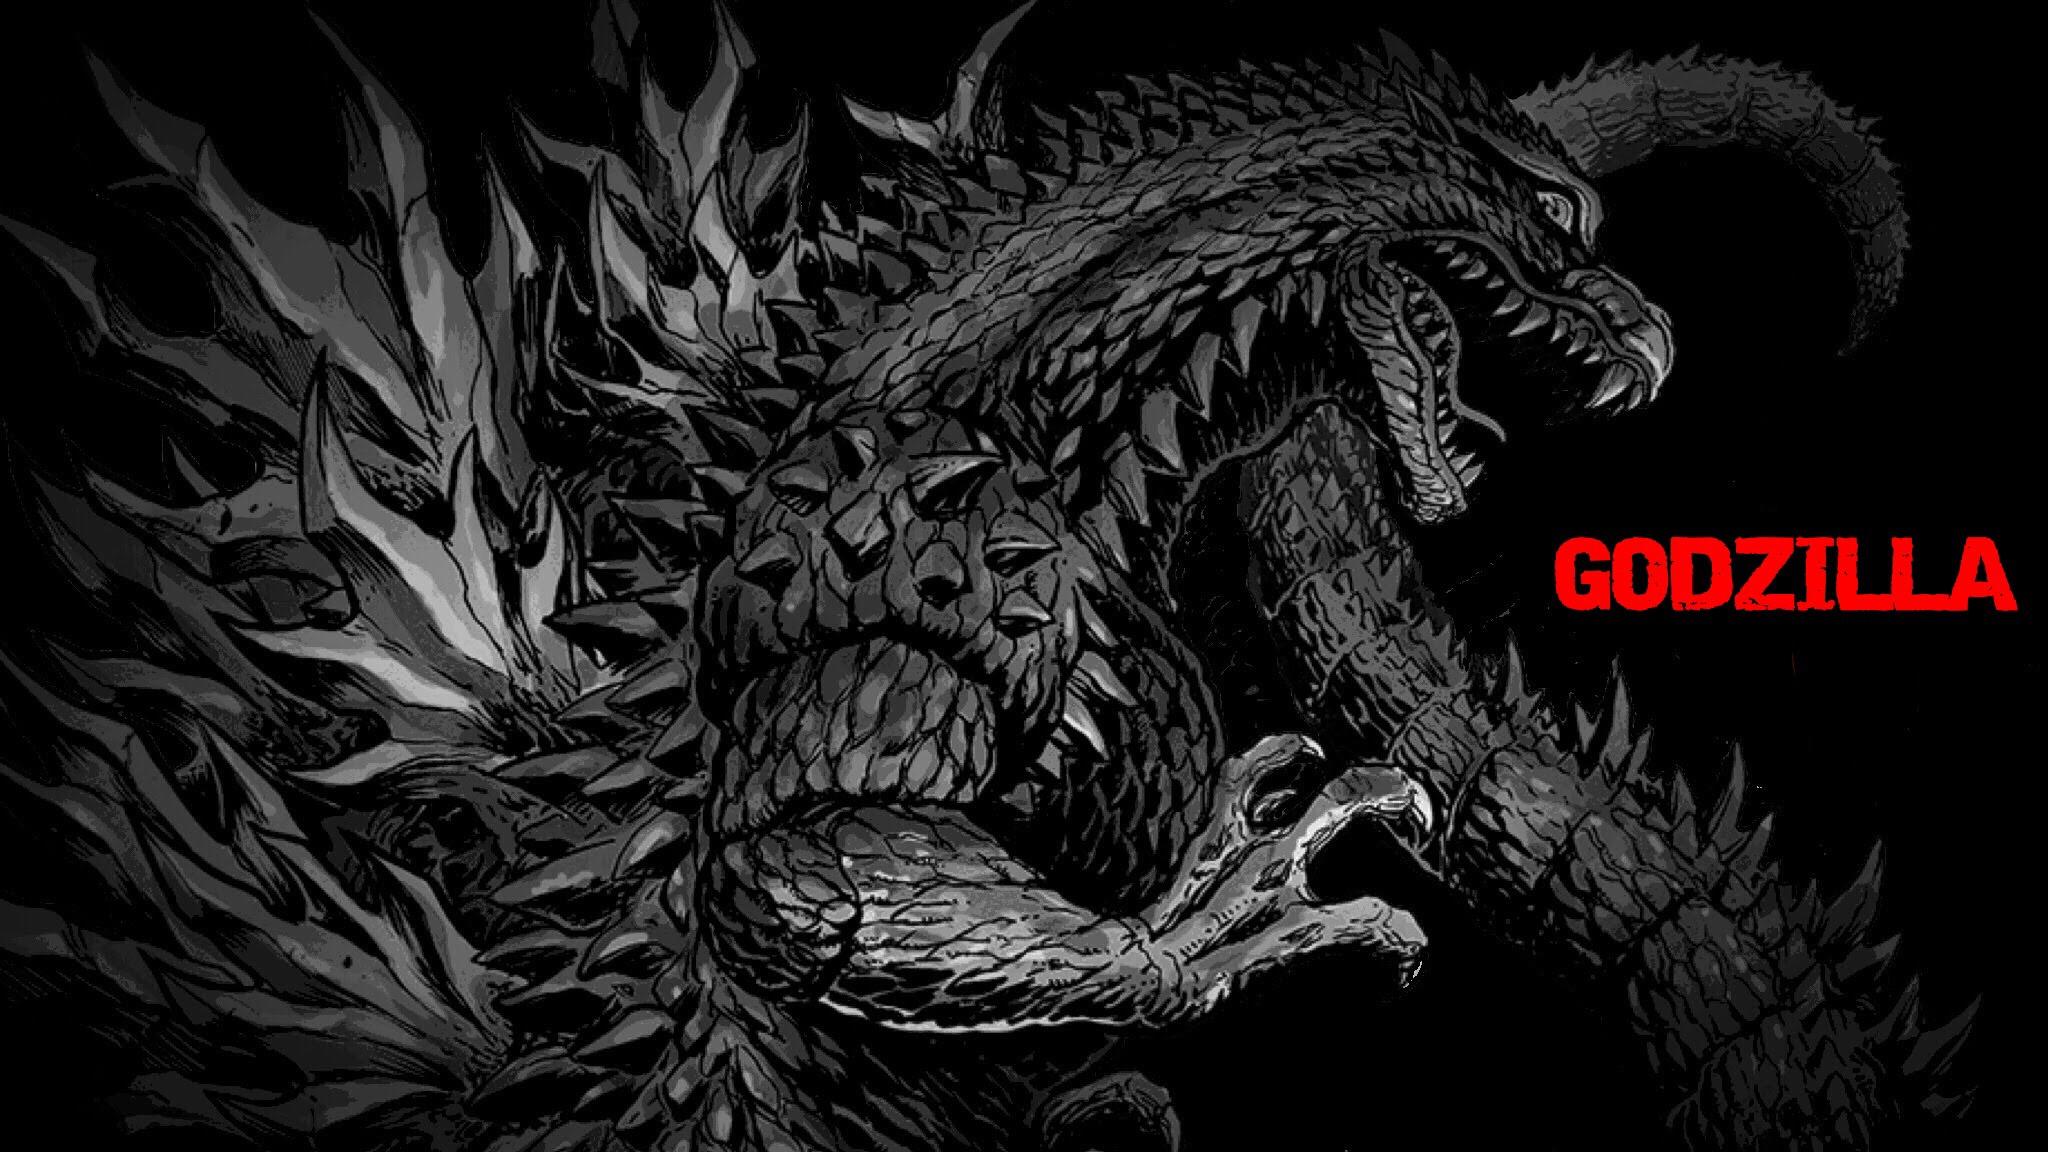 Download Godzilla Earth Unleashed in a Furious Roar Wallpaper